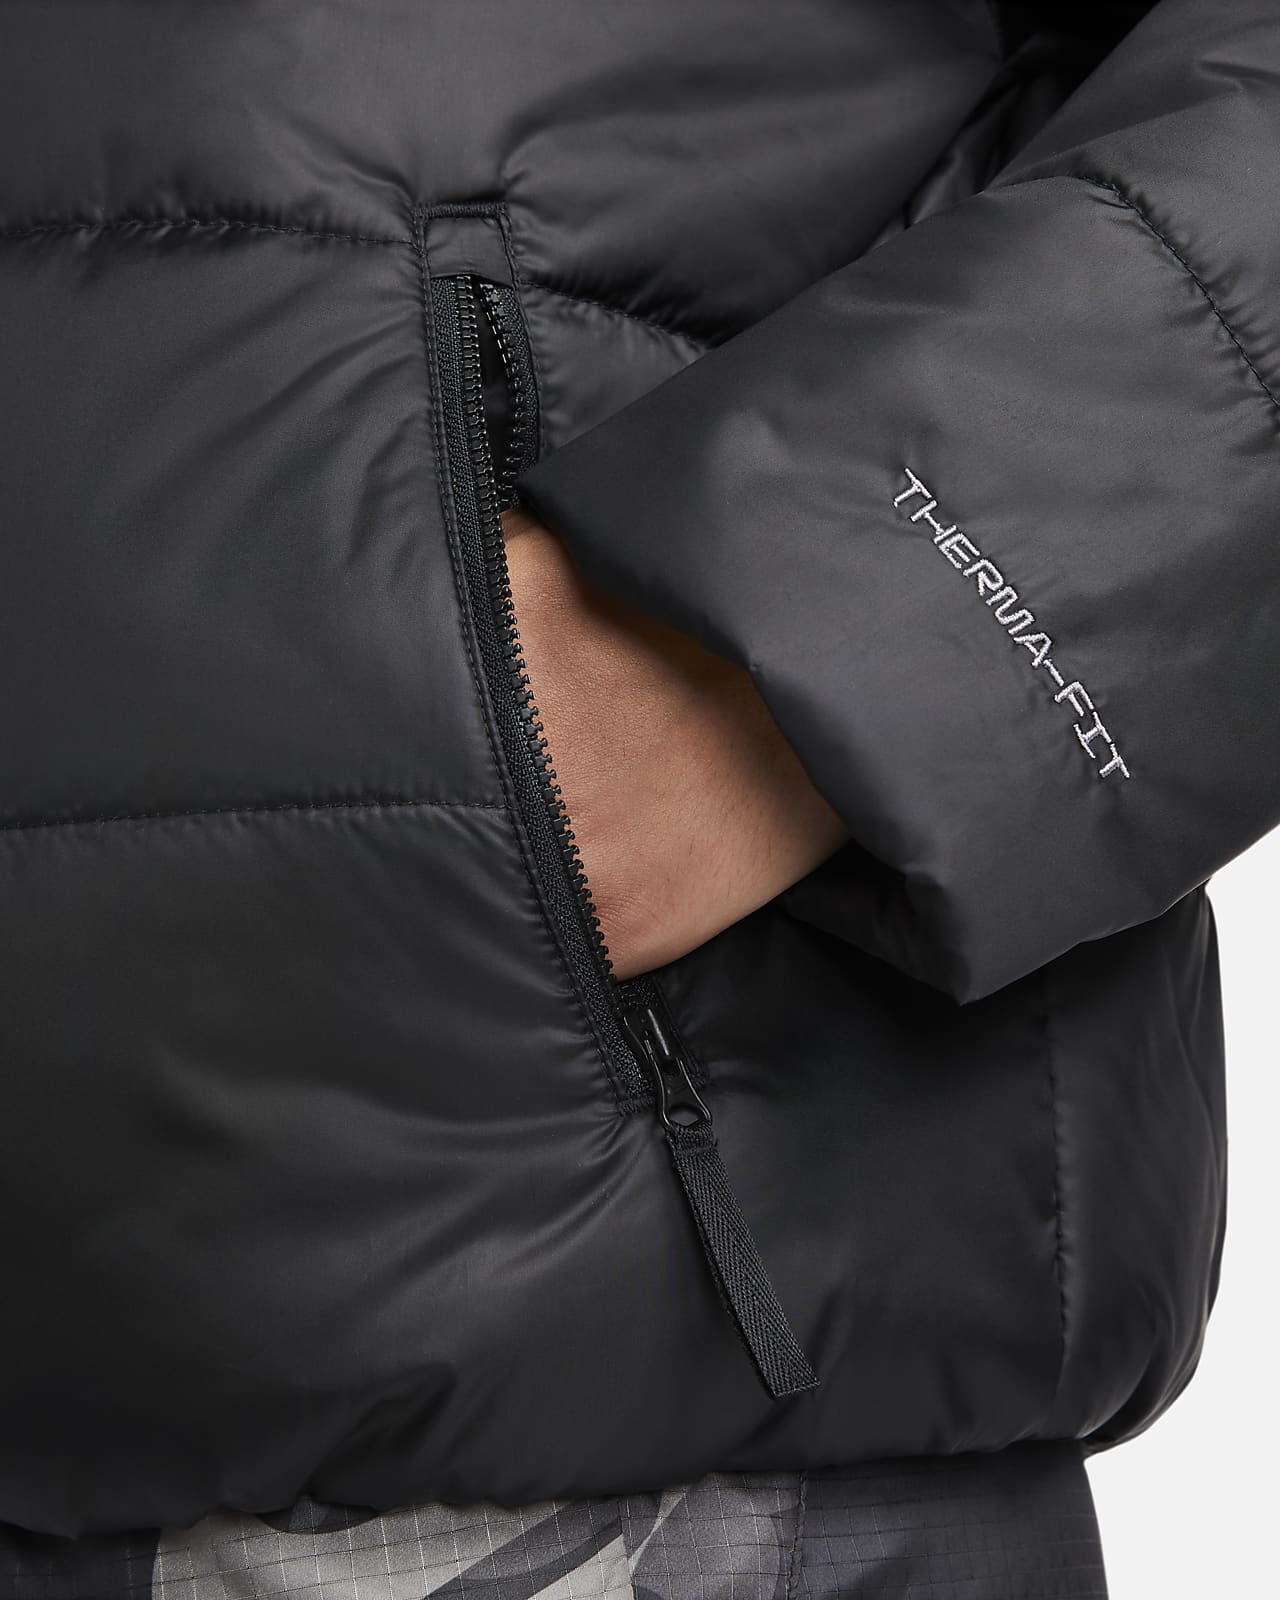 Nike Sportswear Therma-fit Repel Coat in Black